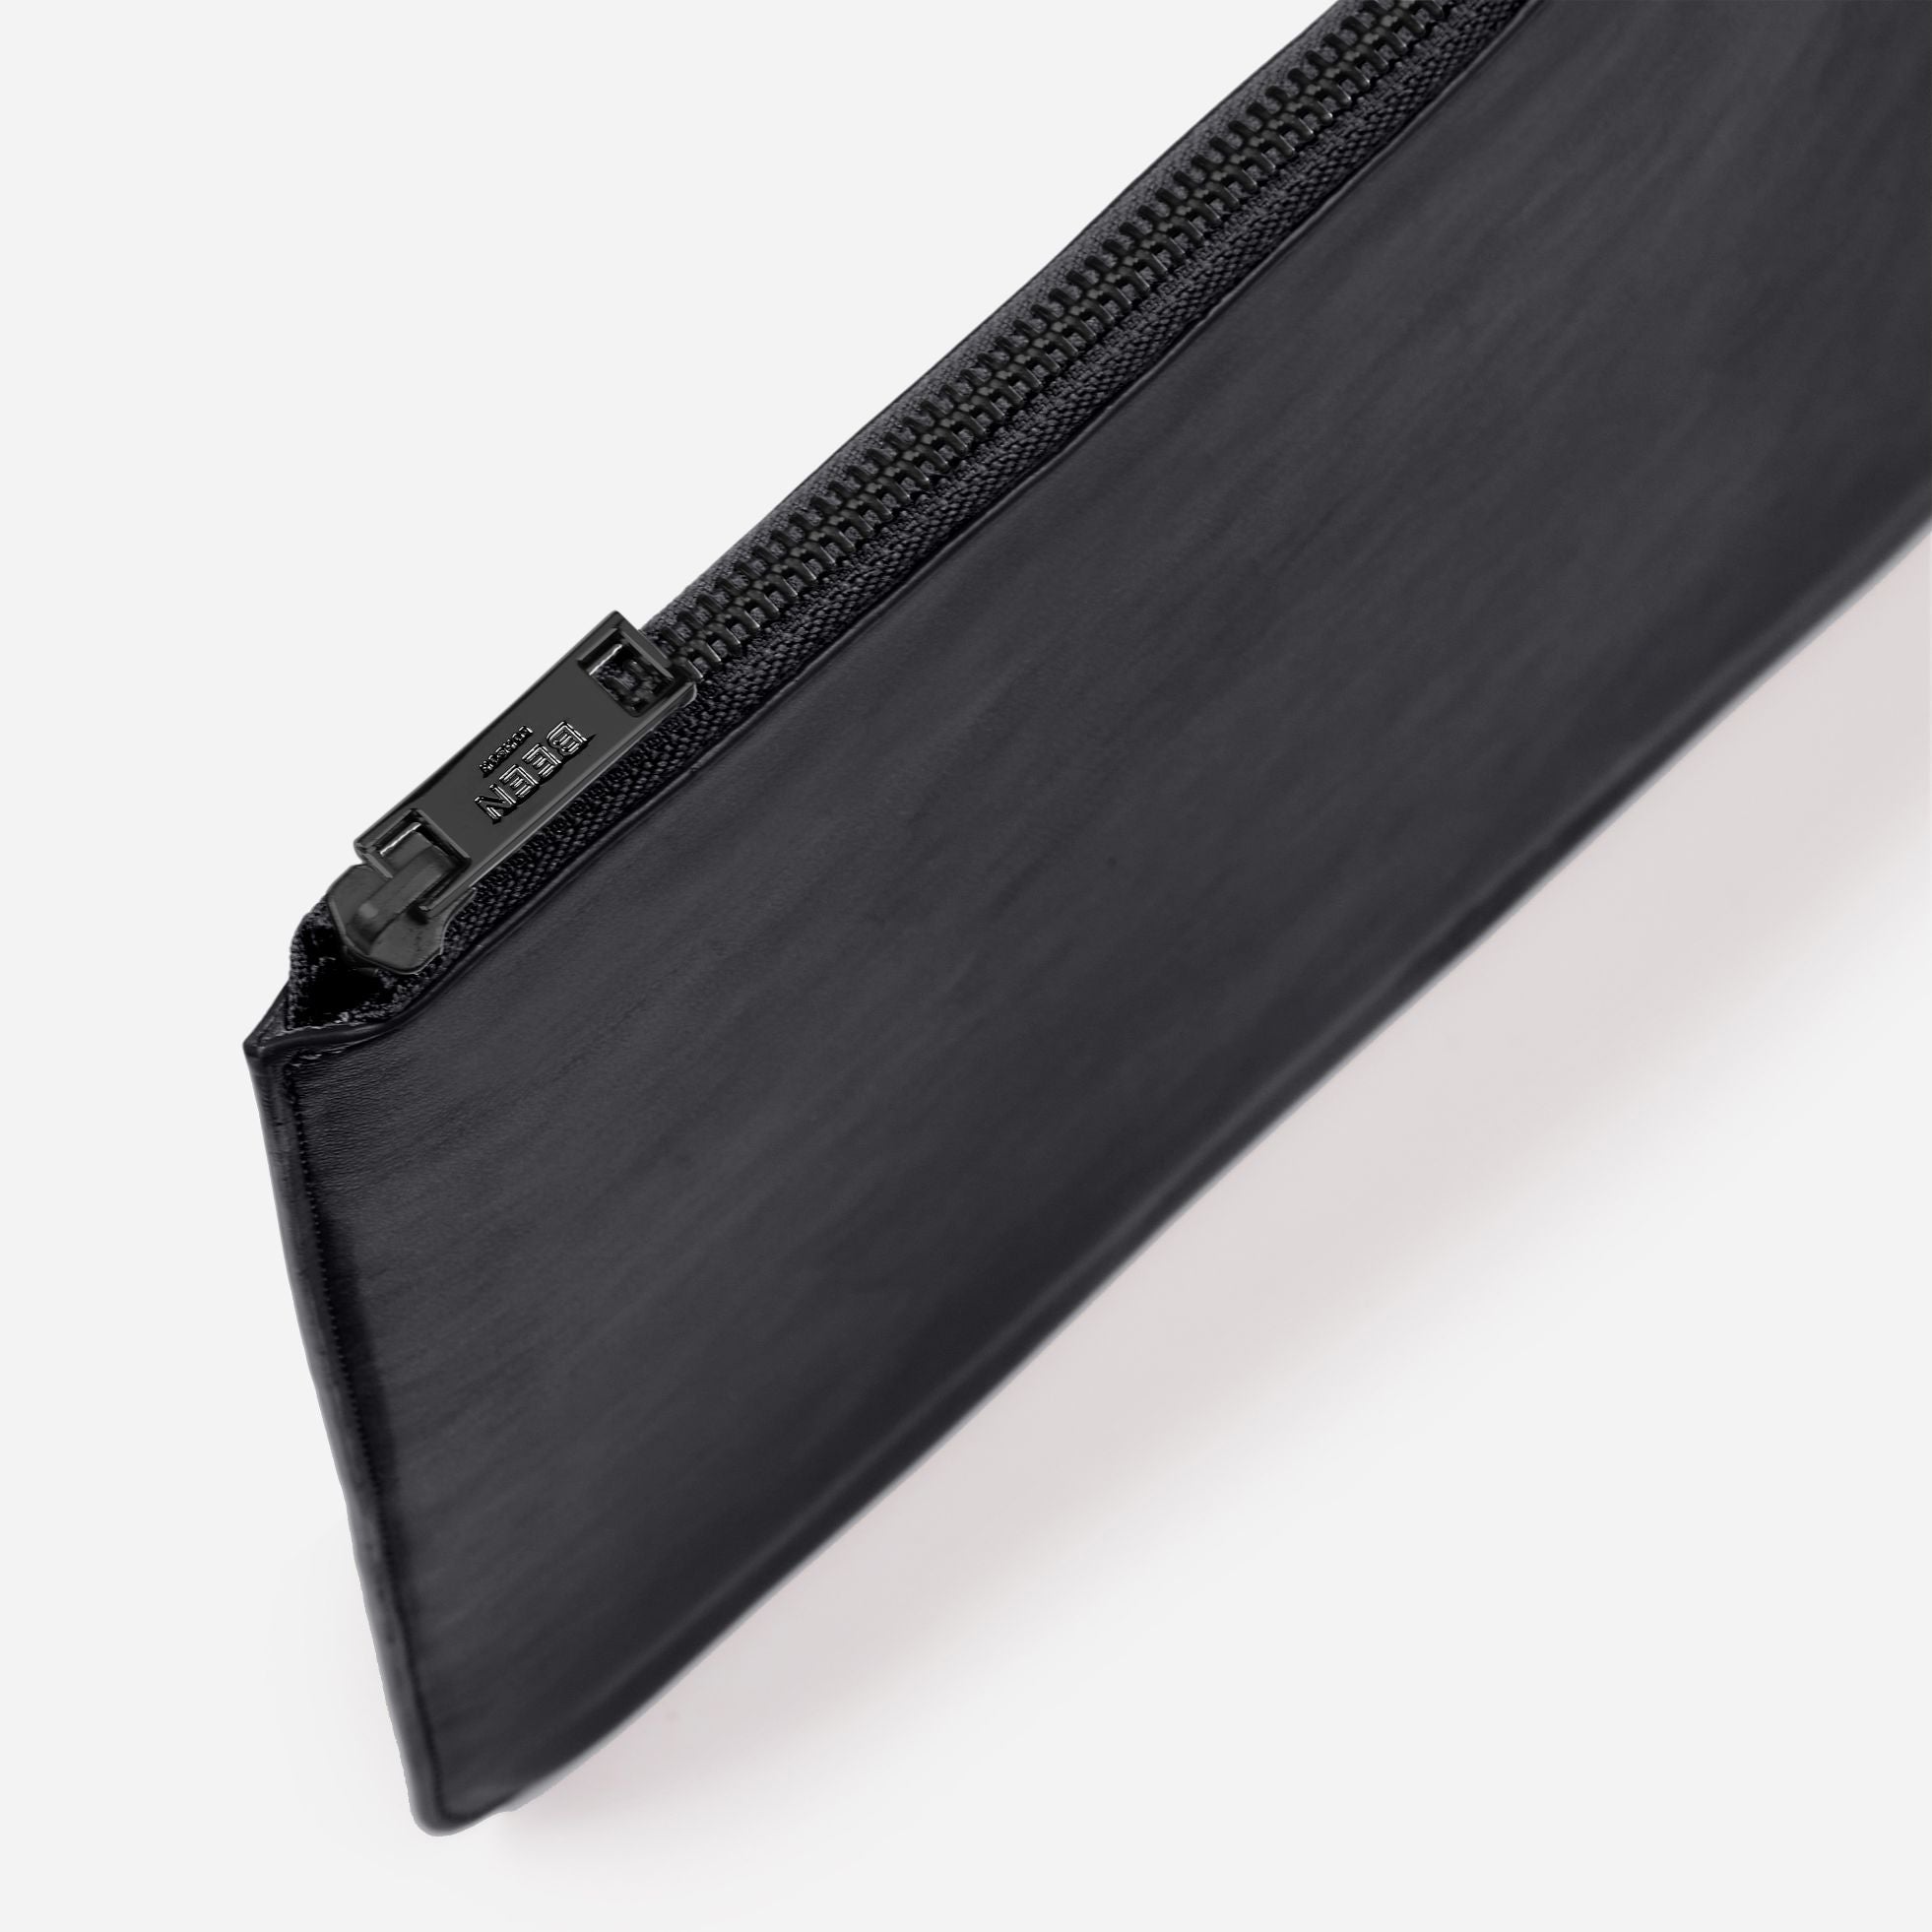 Martello Laptop Case- Large pouch in Black Onyx top